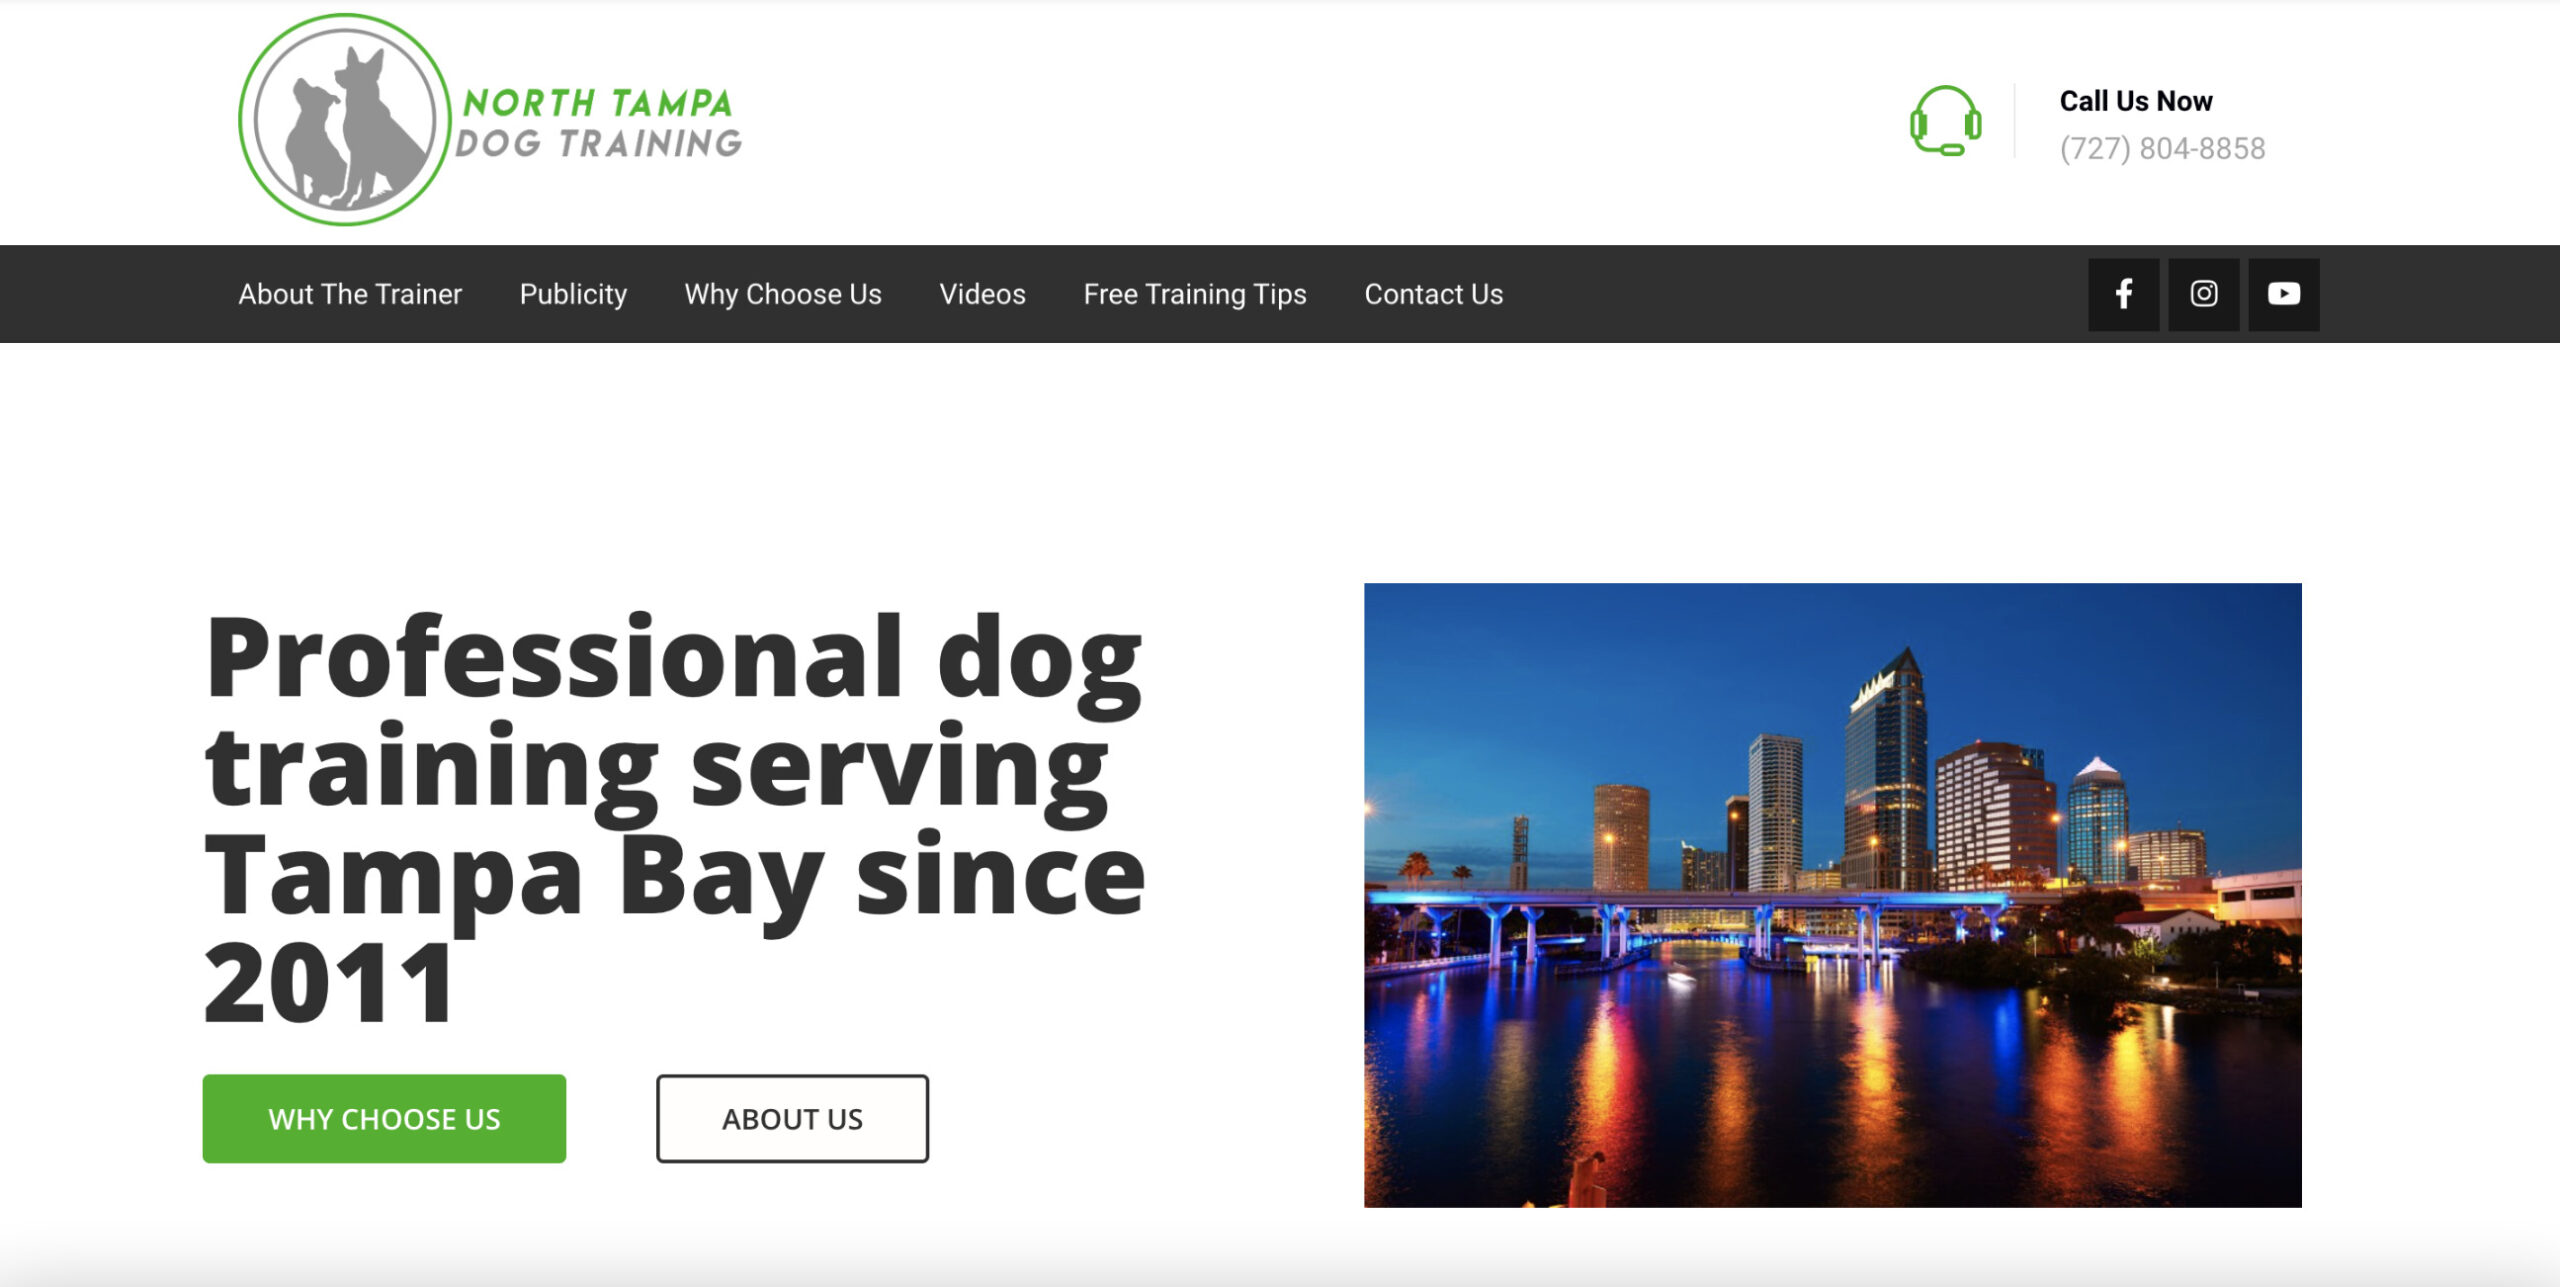 North Tampa Dog Training - Tampa Web Designer Client